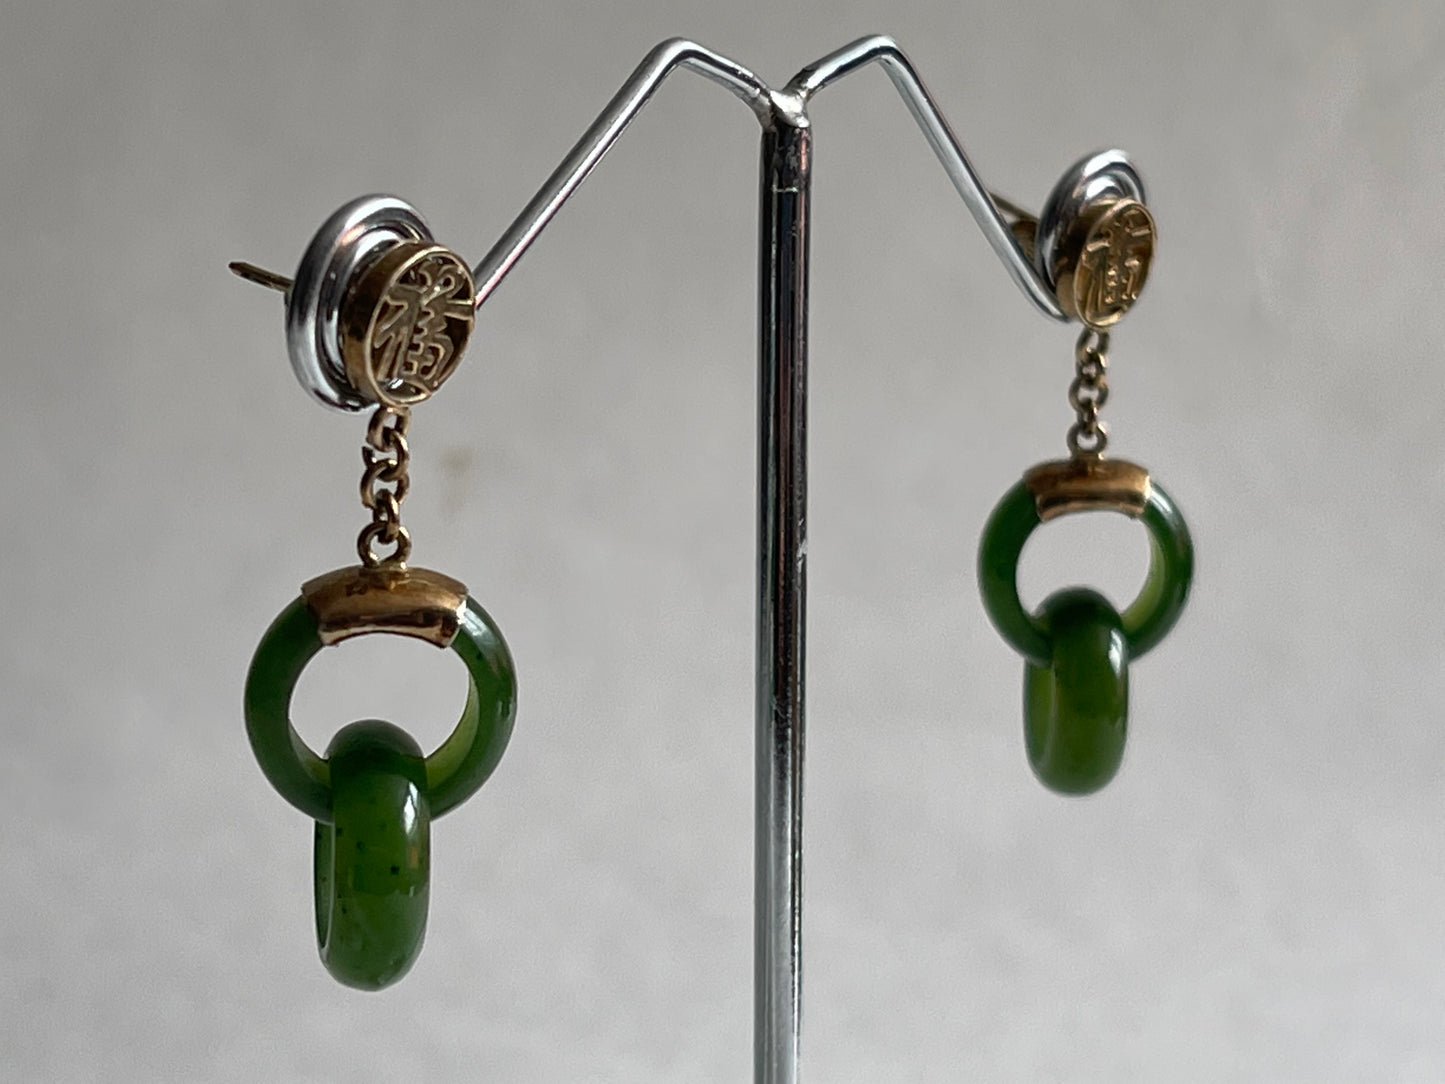 A vintage interlocking jade nephrite earring